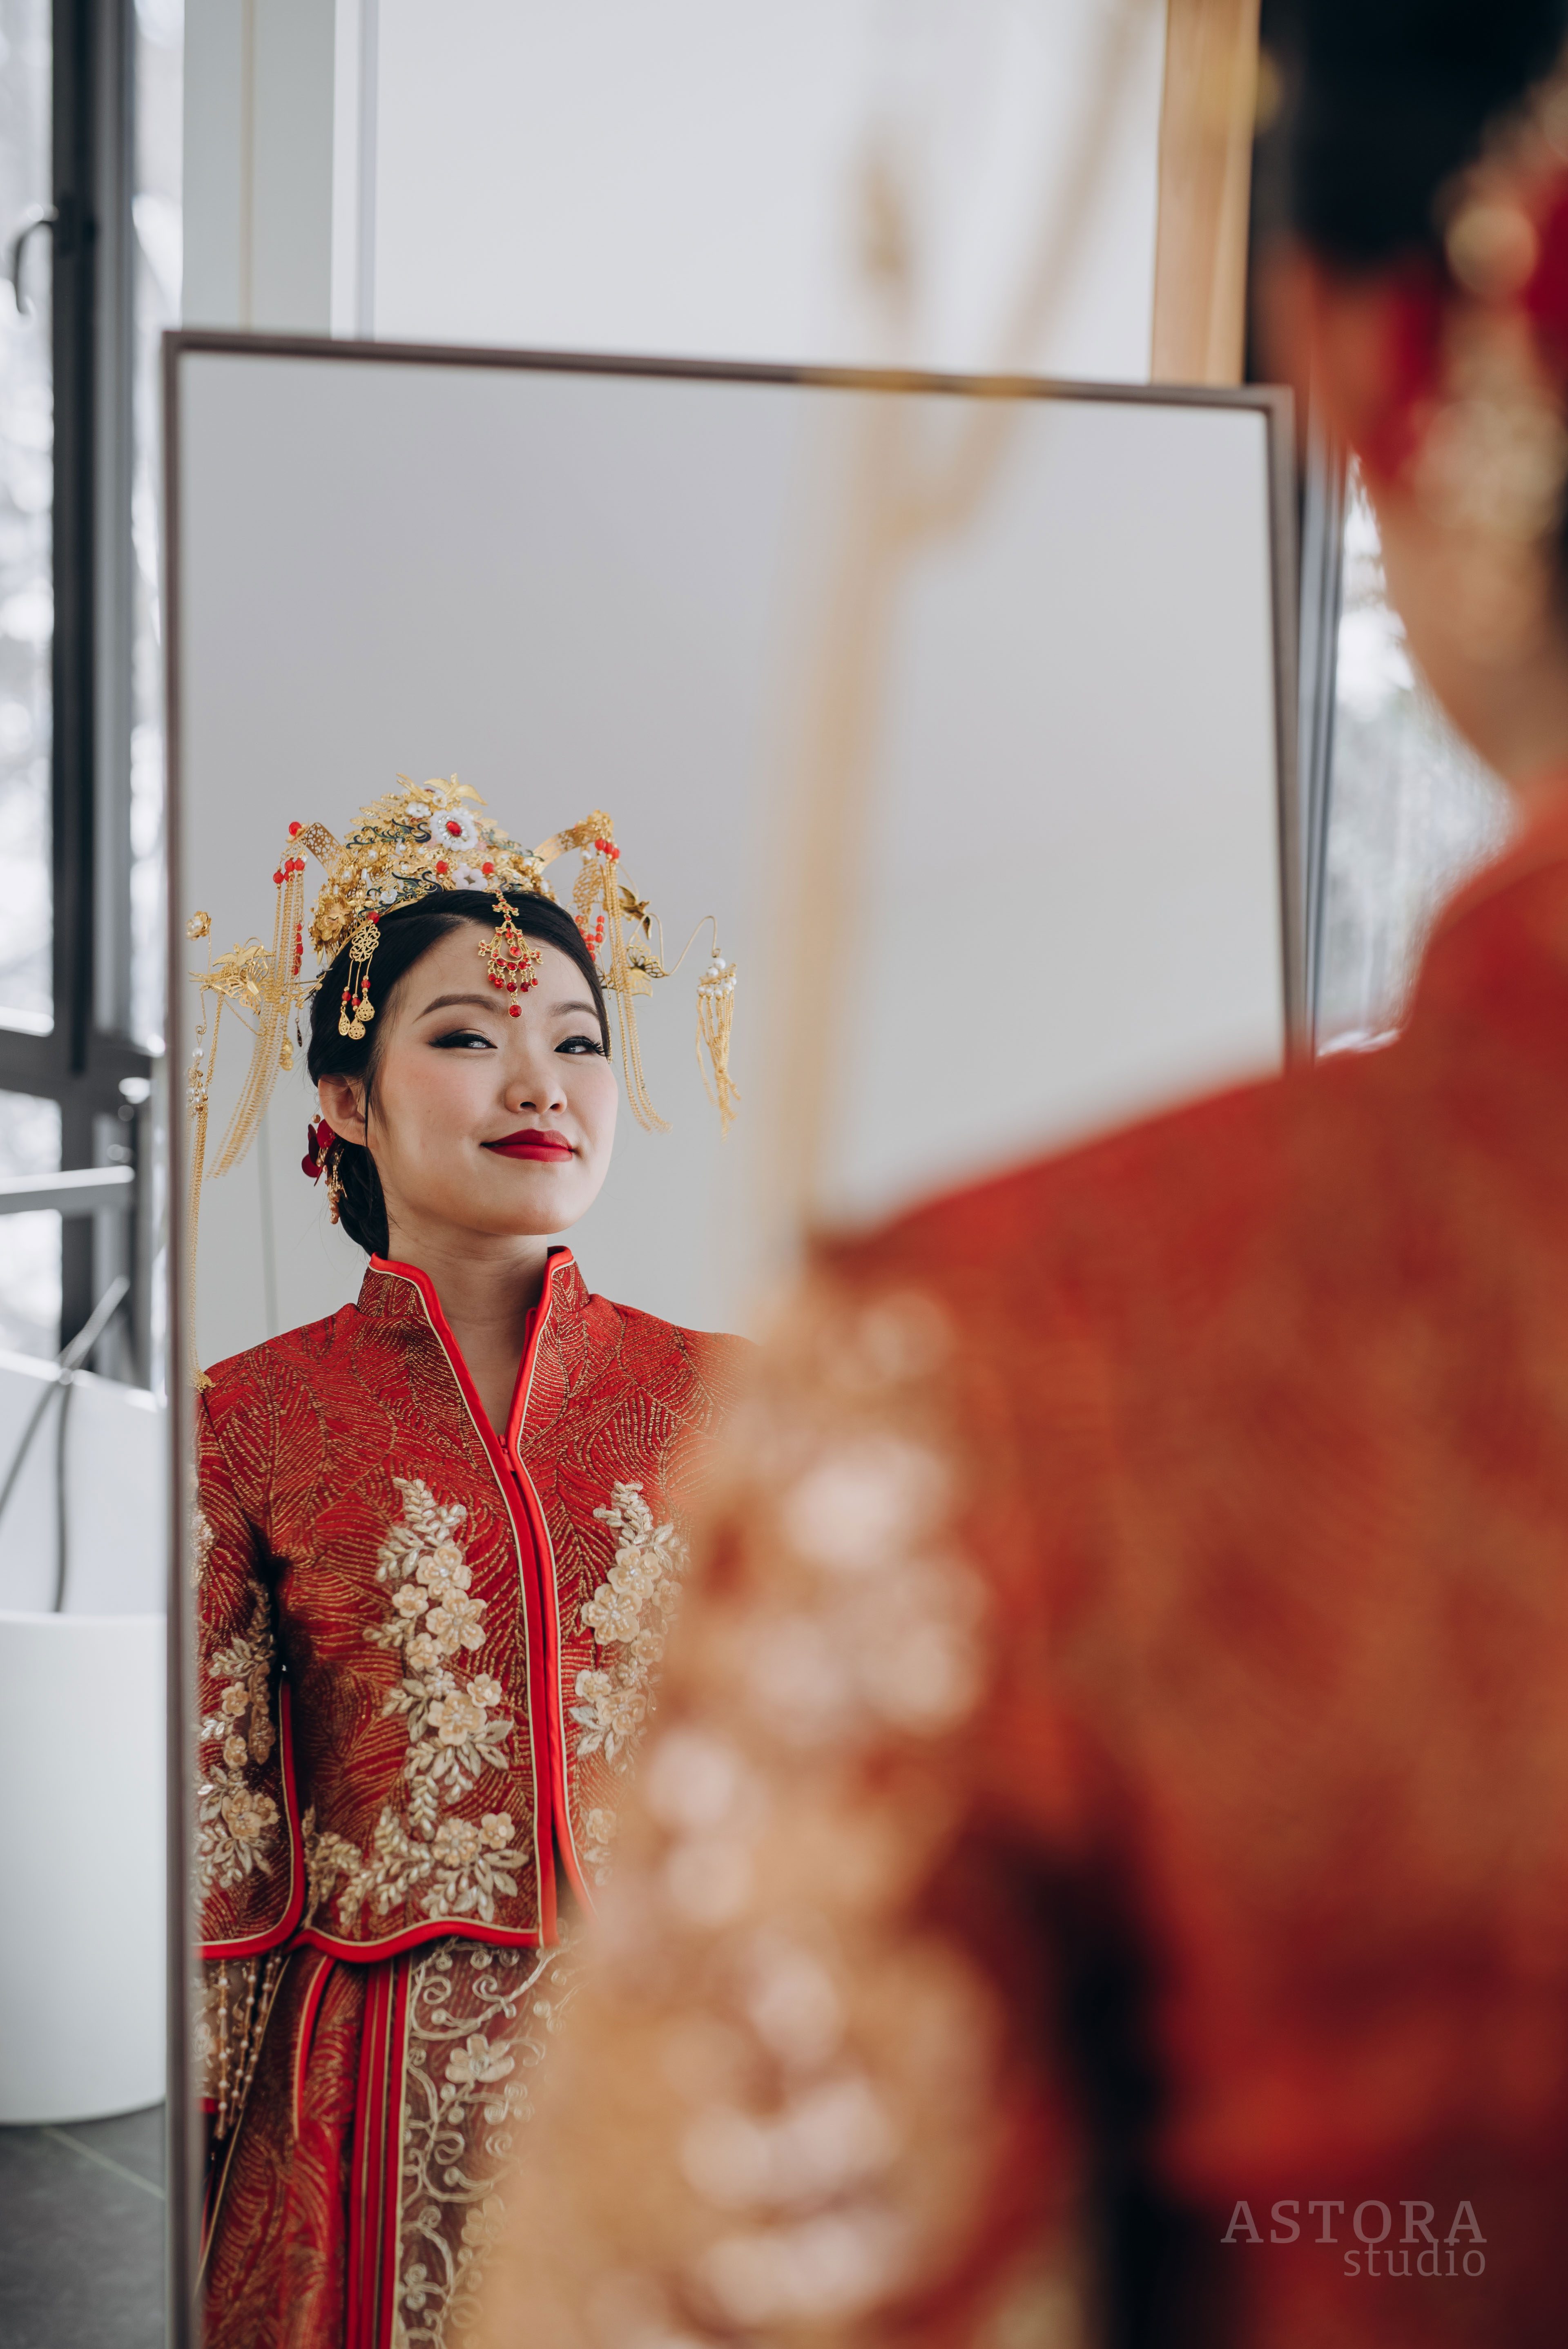 Astora Studio | Chinese wedding photography Toronto